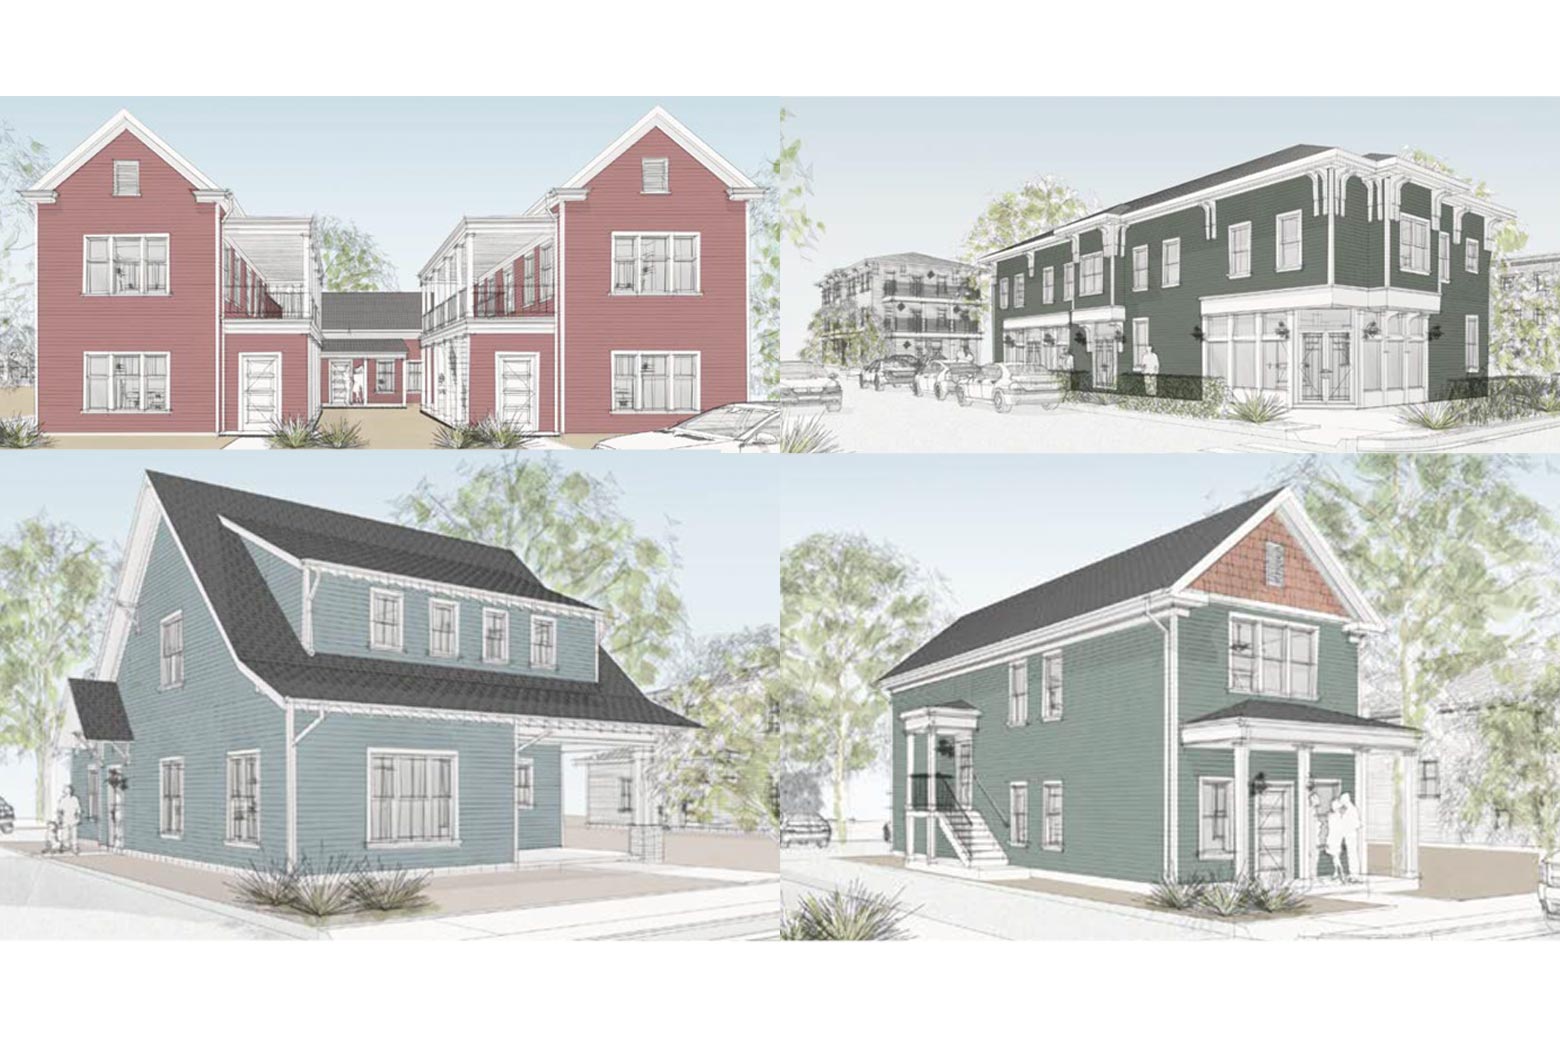 Four different housing designs